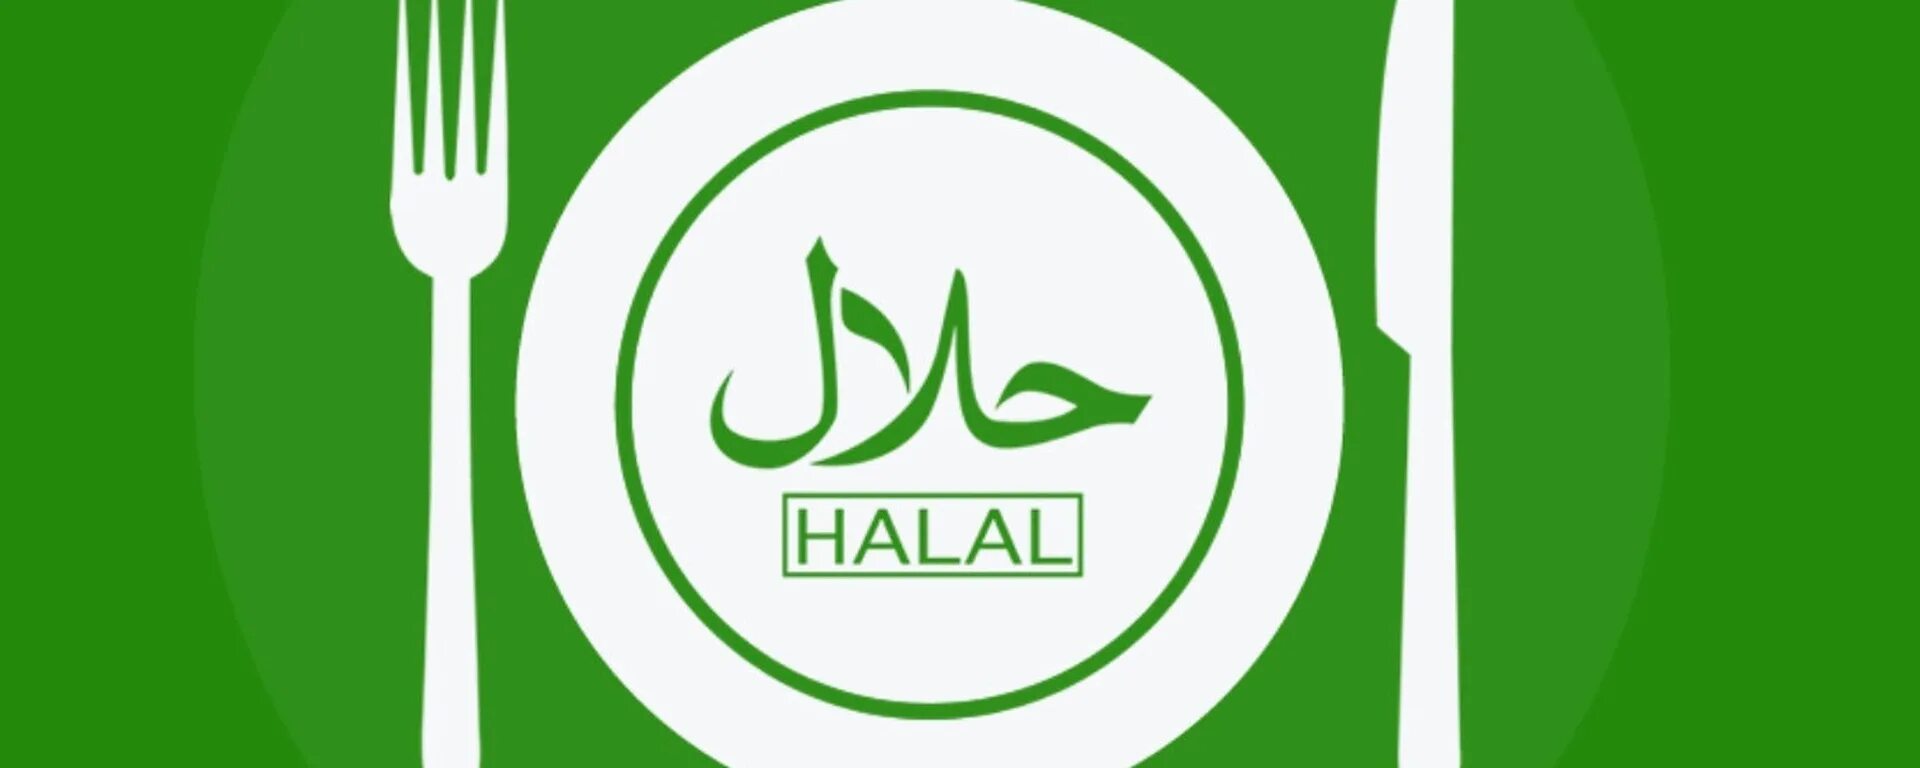 Поселок халяль. Халяль. Эмблема Халяль. Логотип кафе Халяль. Значок Халяль зеленый.